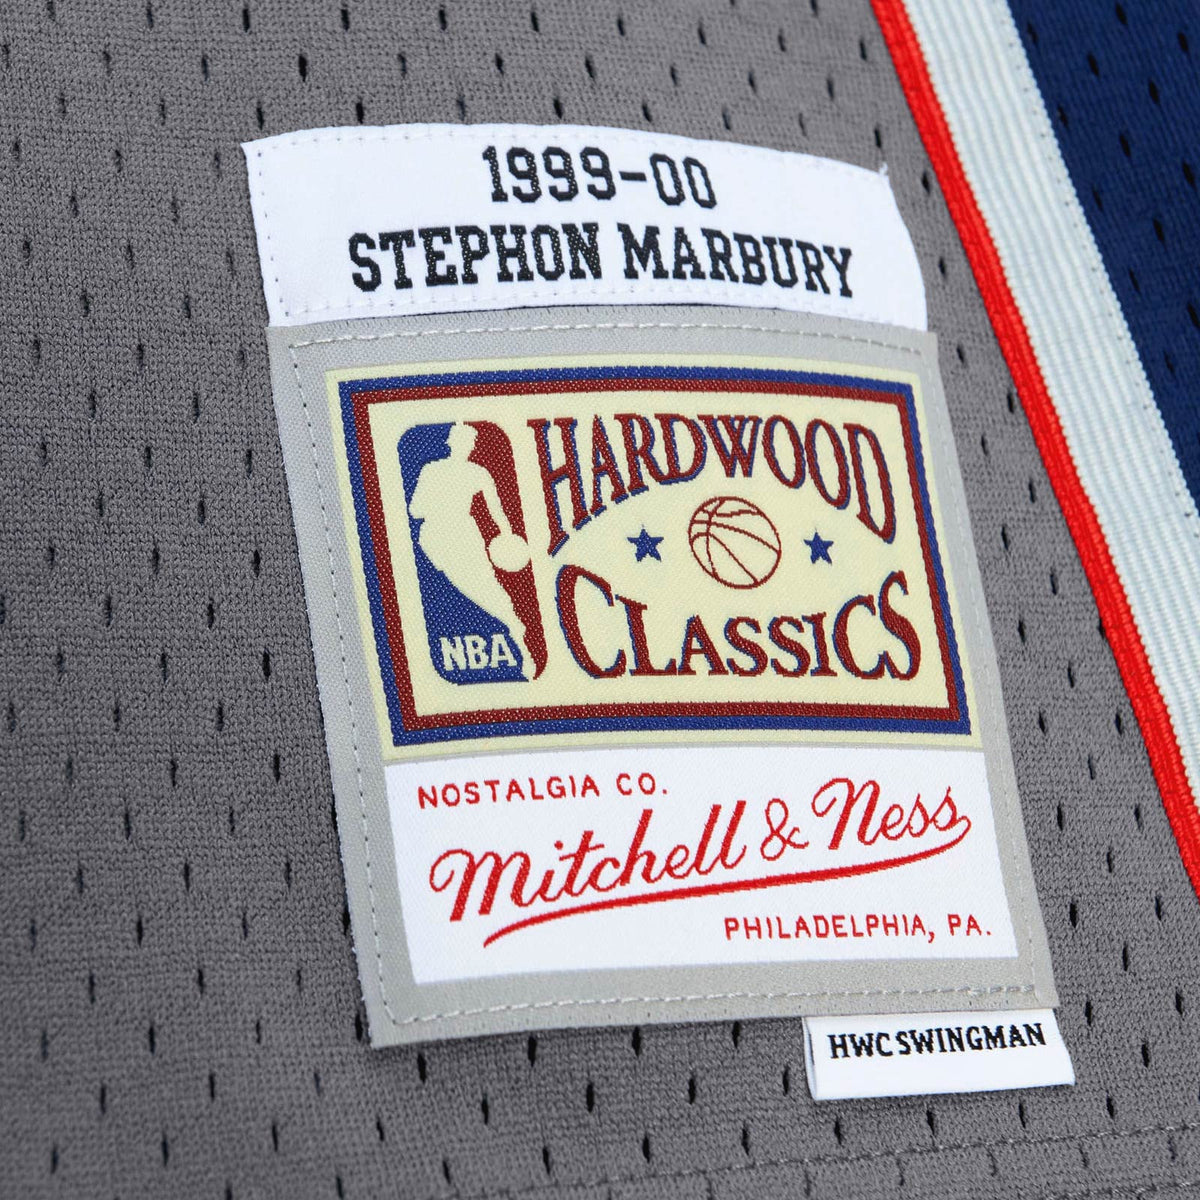 1999-00 Topps Stephon Marbury New Jersey Nets #93